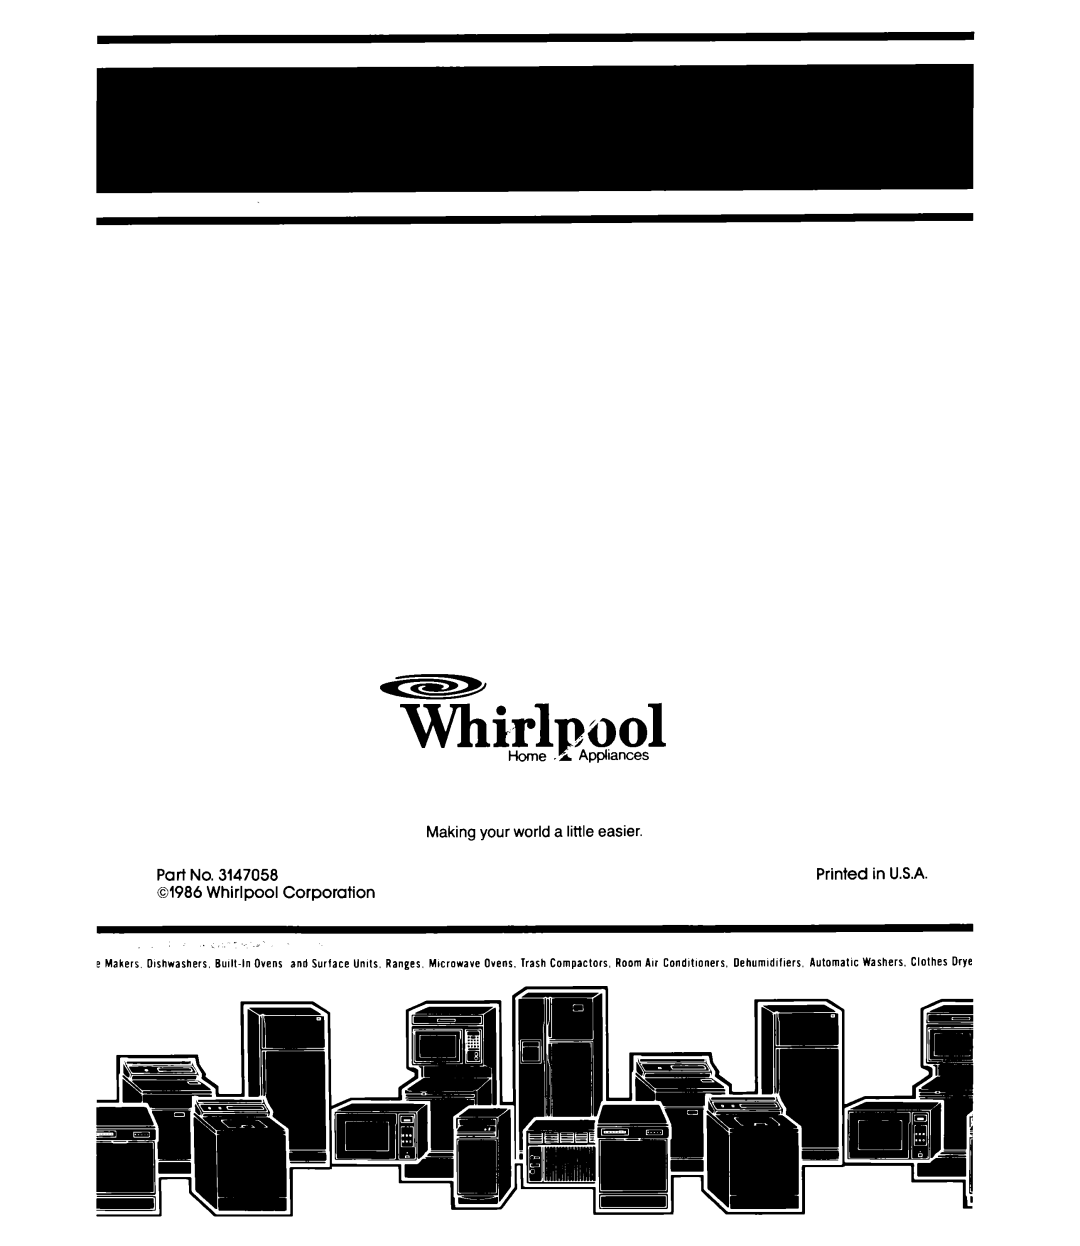 Whirlpool Microwace Oven manual TKidpool, Part No. 01986 Whirlpool Corporation 